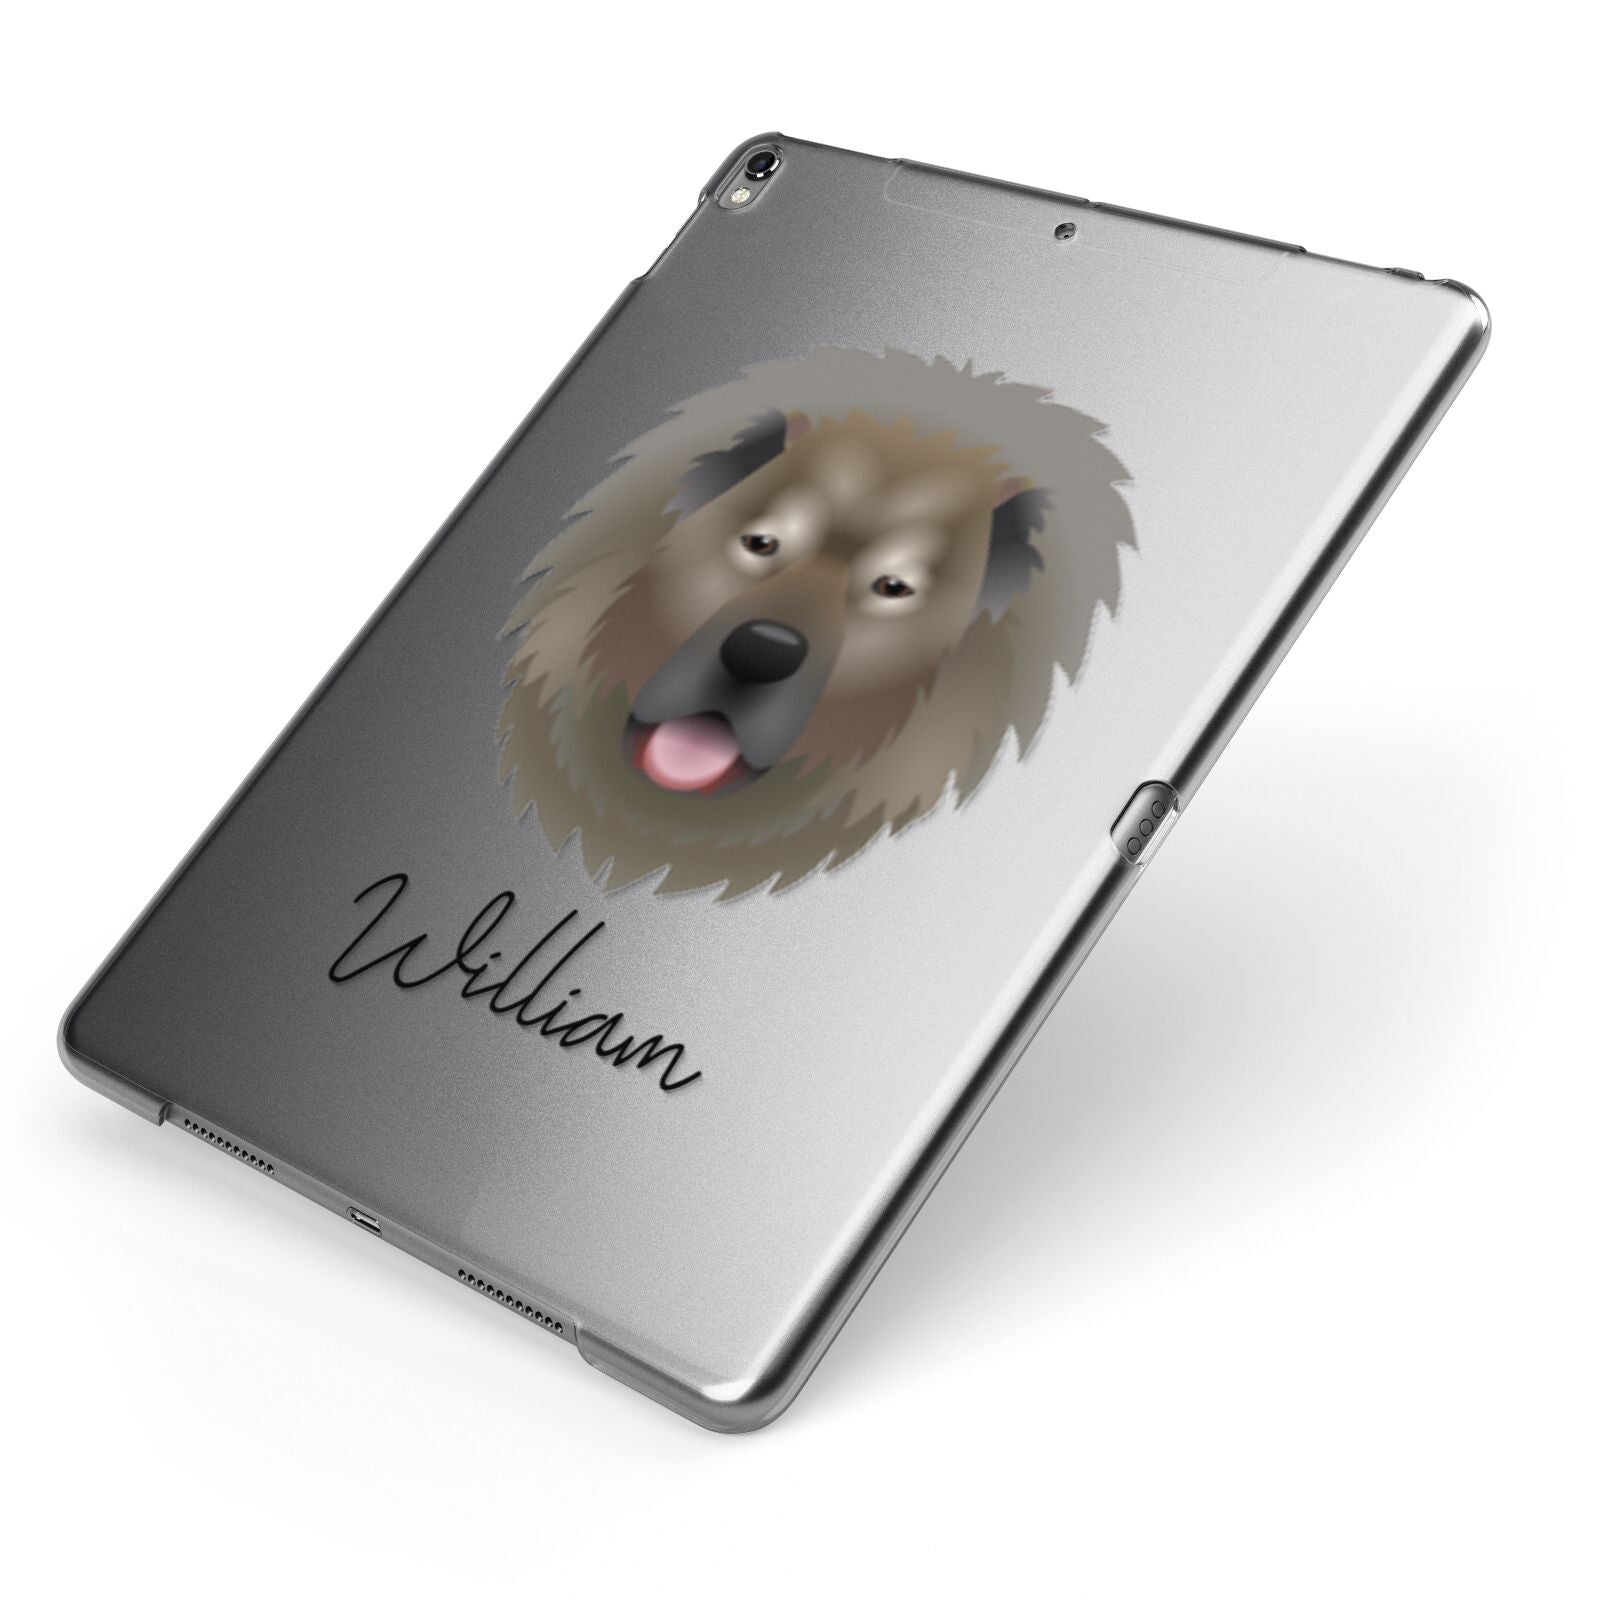 Causasian Shepherd Personalised Apple iPad Case on Grey iPad Side View